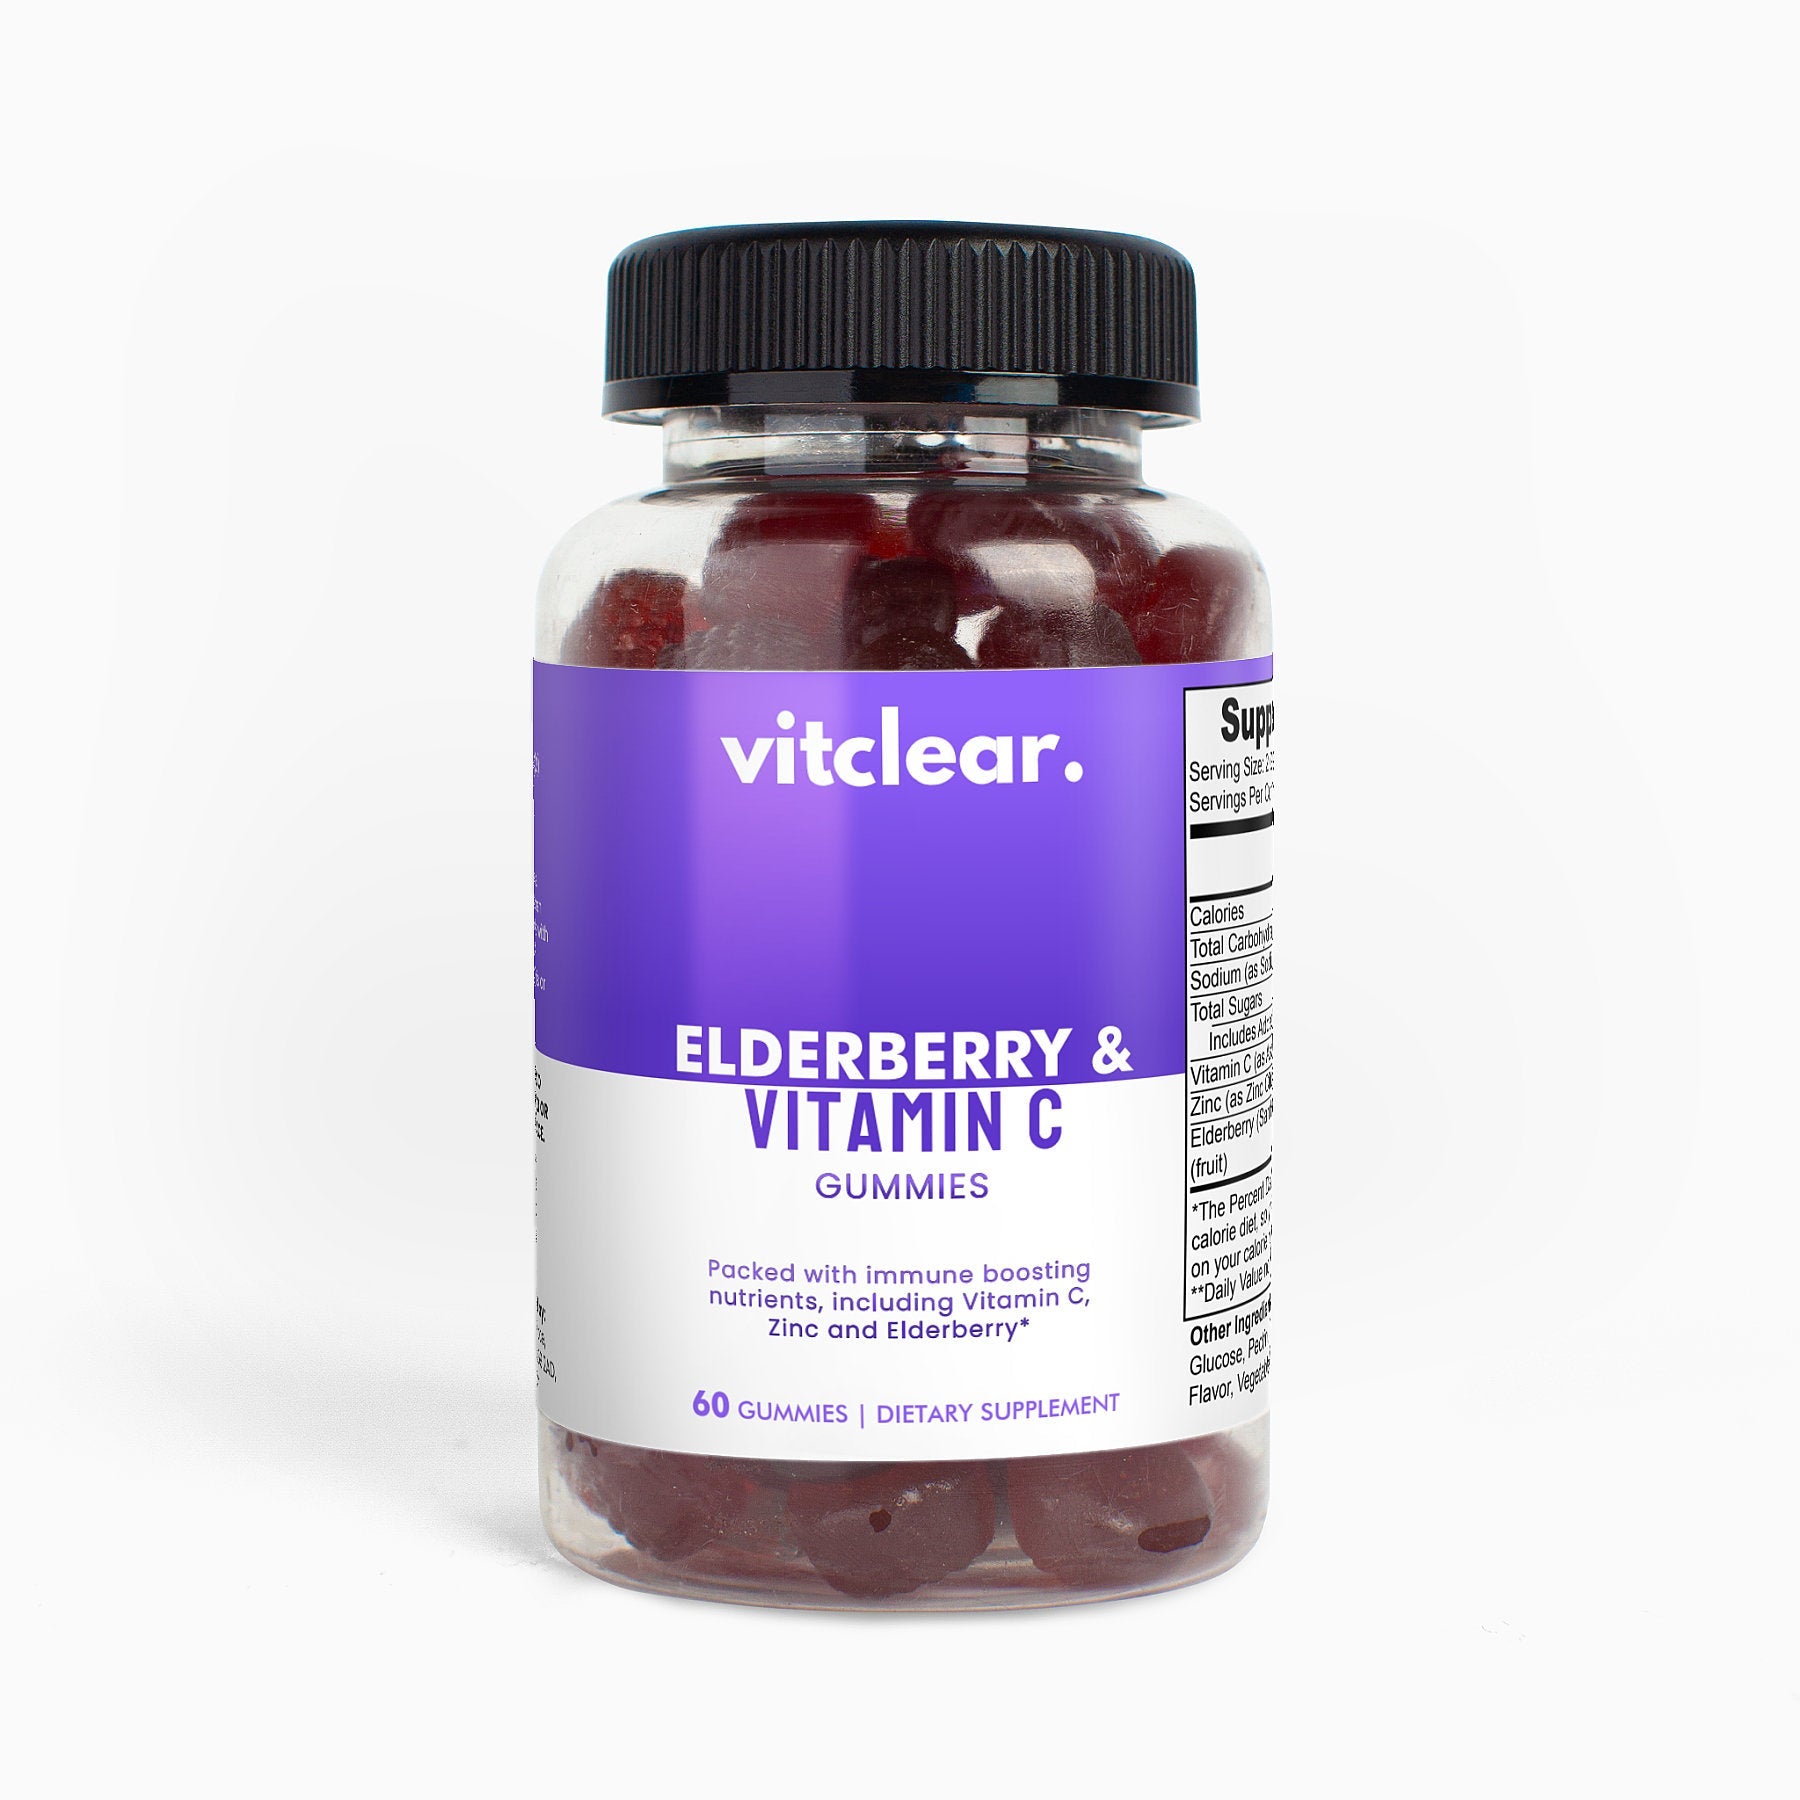 Elderberry & Vitamin C Gummies - Vitclear.